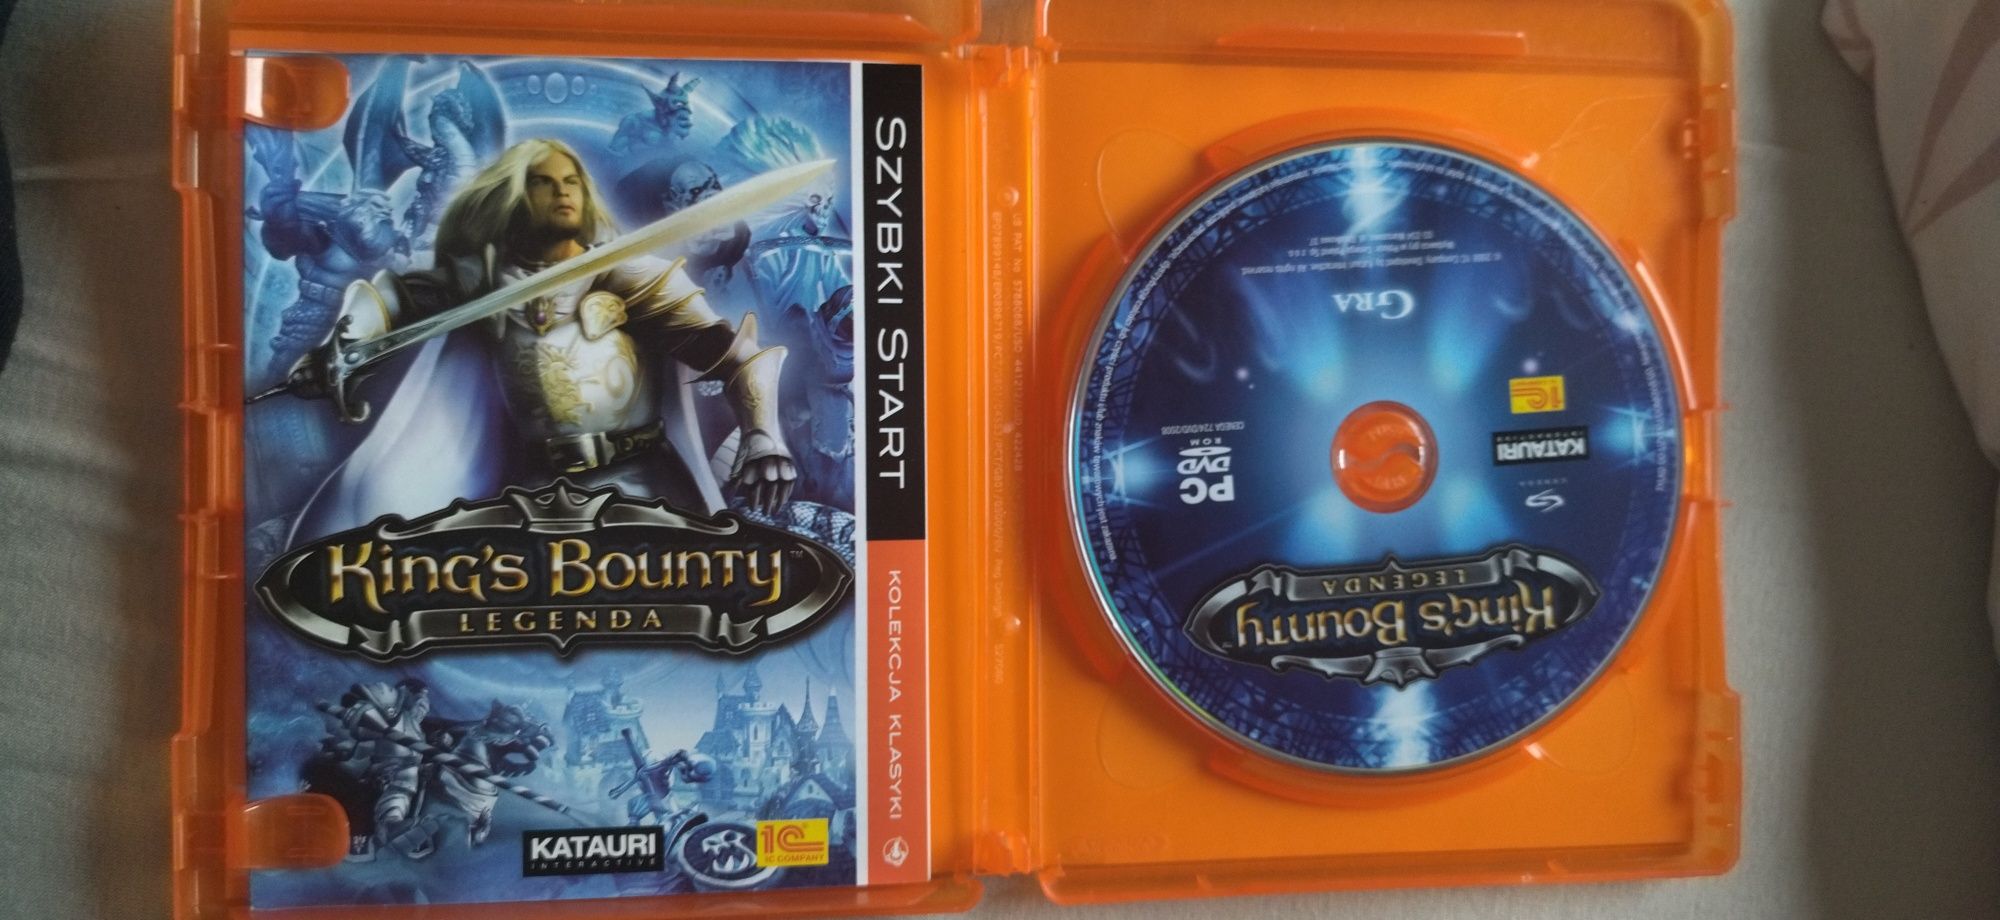 Gra PC/CD - King's Bounty Legenda